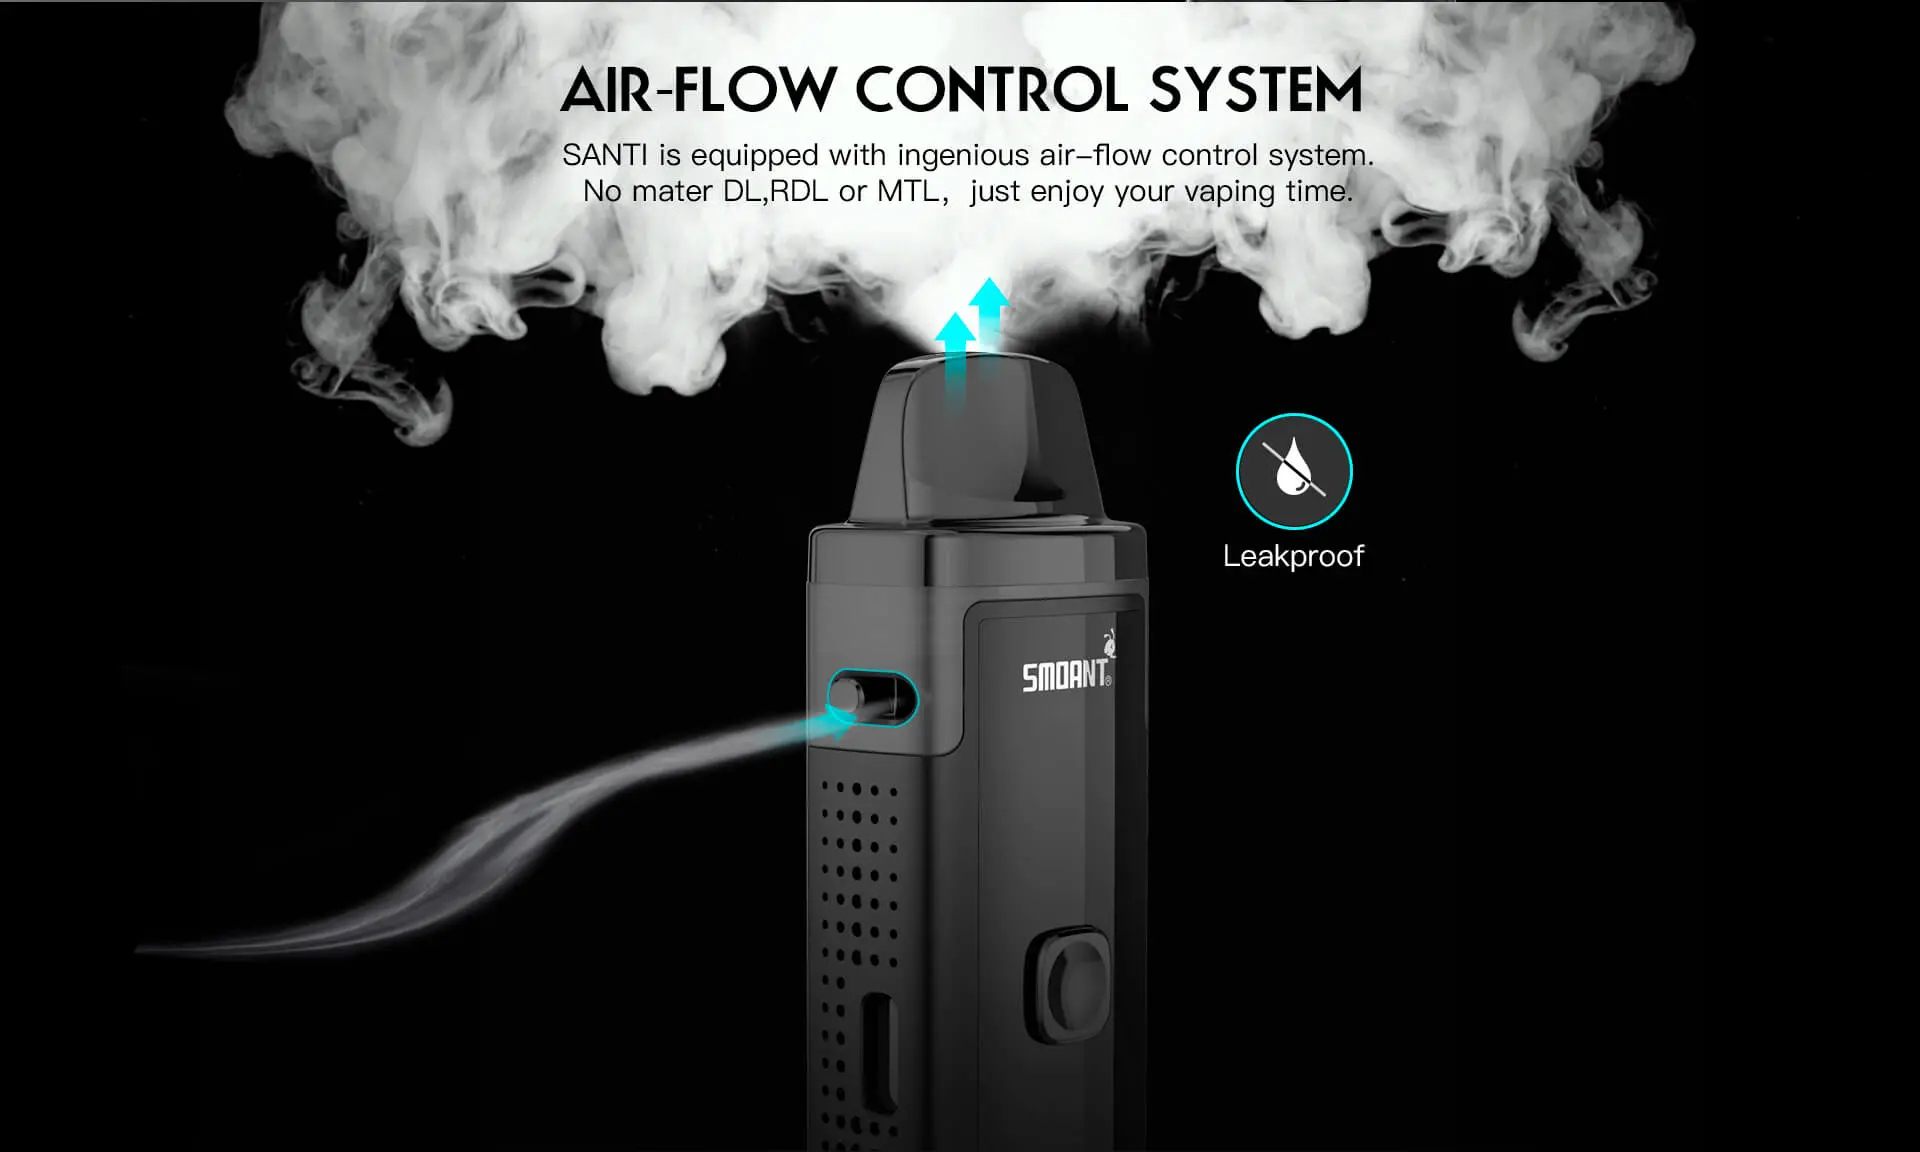 santi AIR-FLOW CONTROL SYSTEM